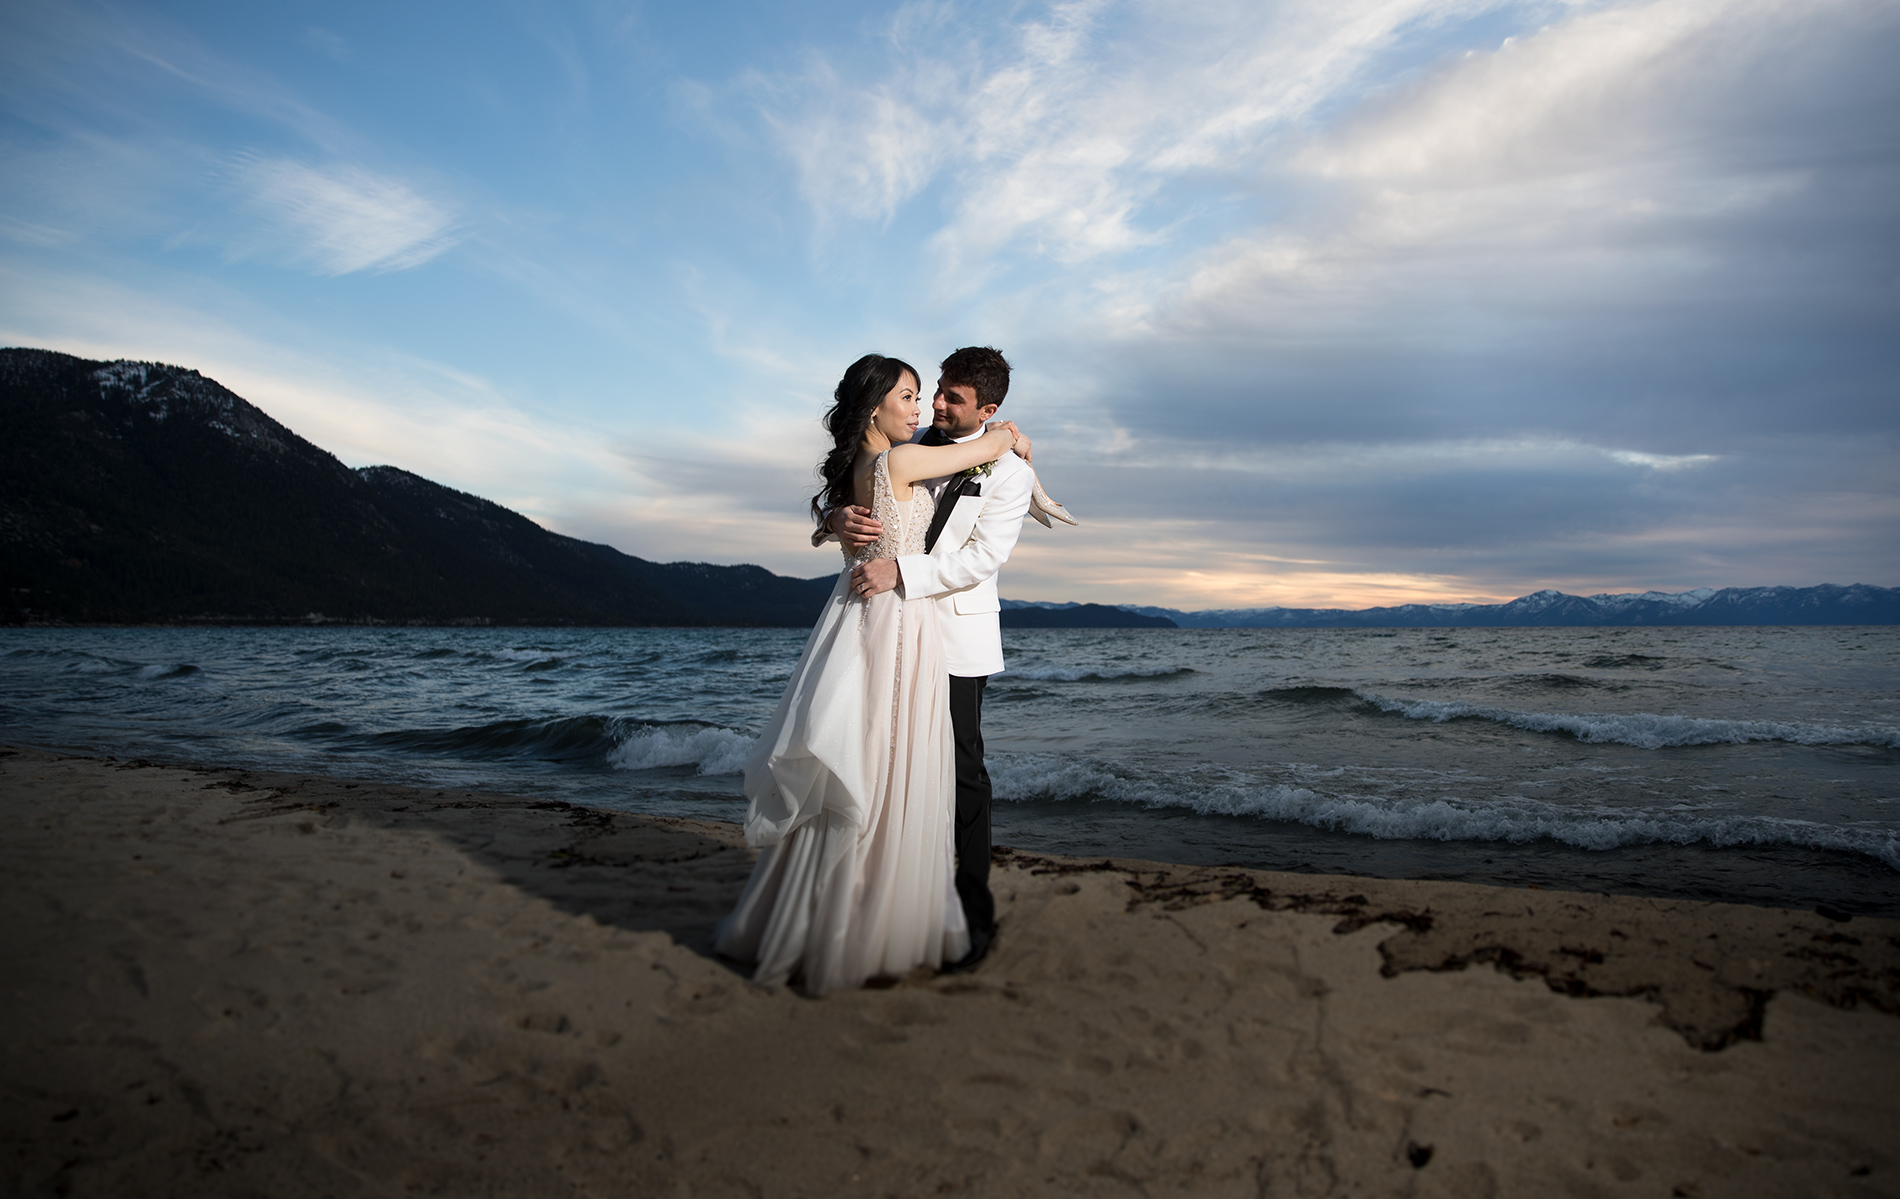 Tahoe-Hyatt-sunset-wedding-ceremony